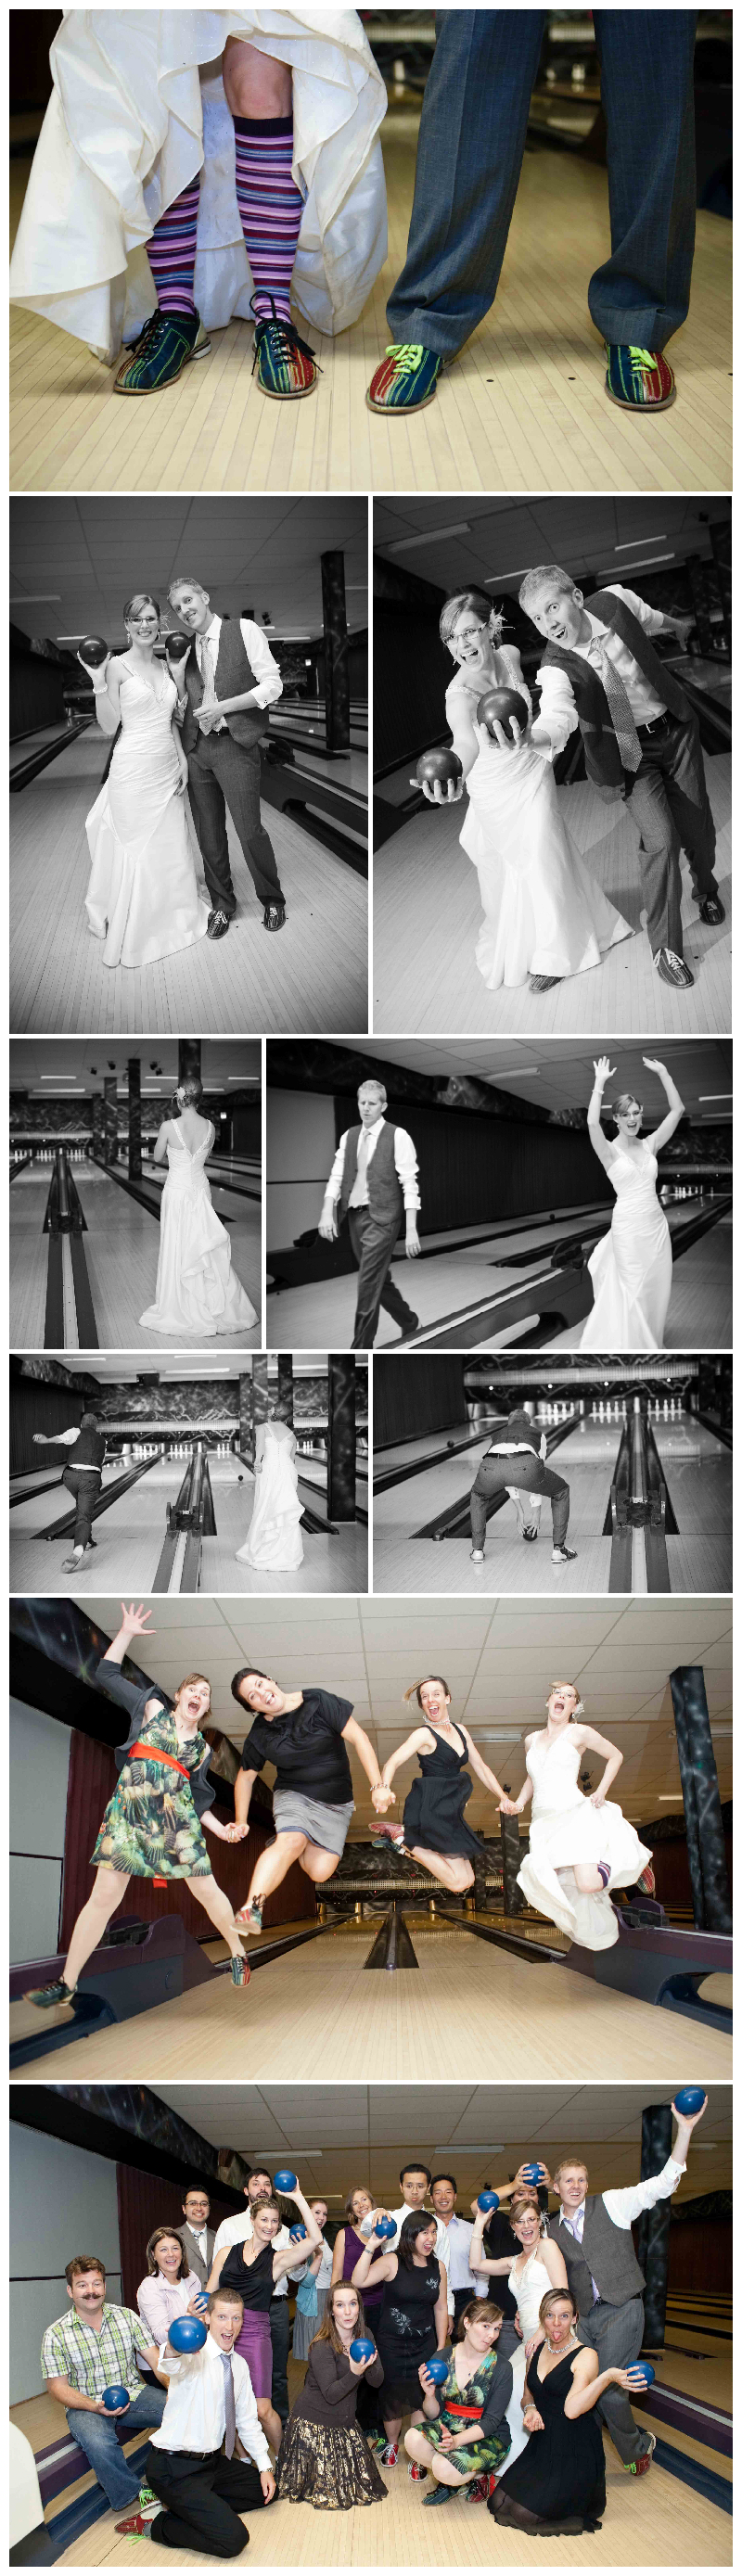 wedding bowling, bowling, wedding dress, vancouver, wedding photos, wink photography